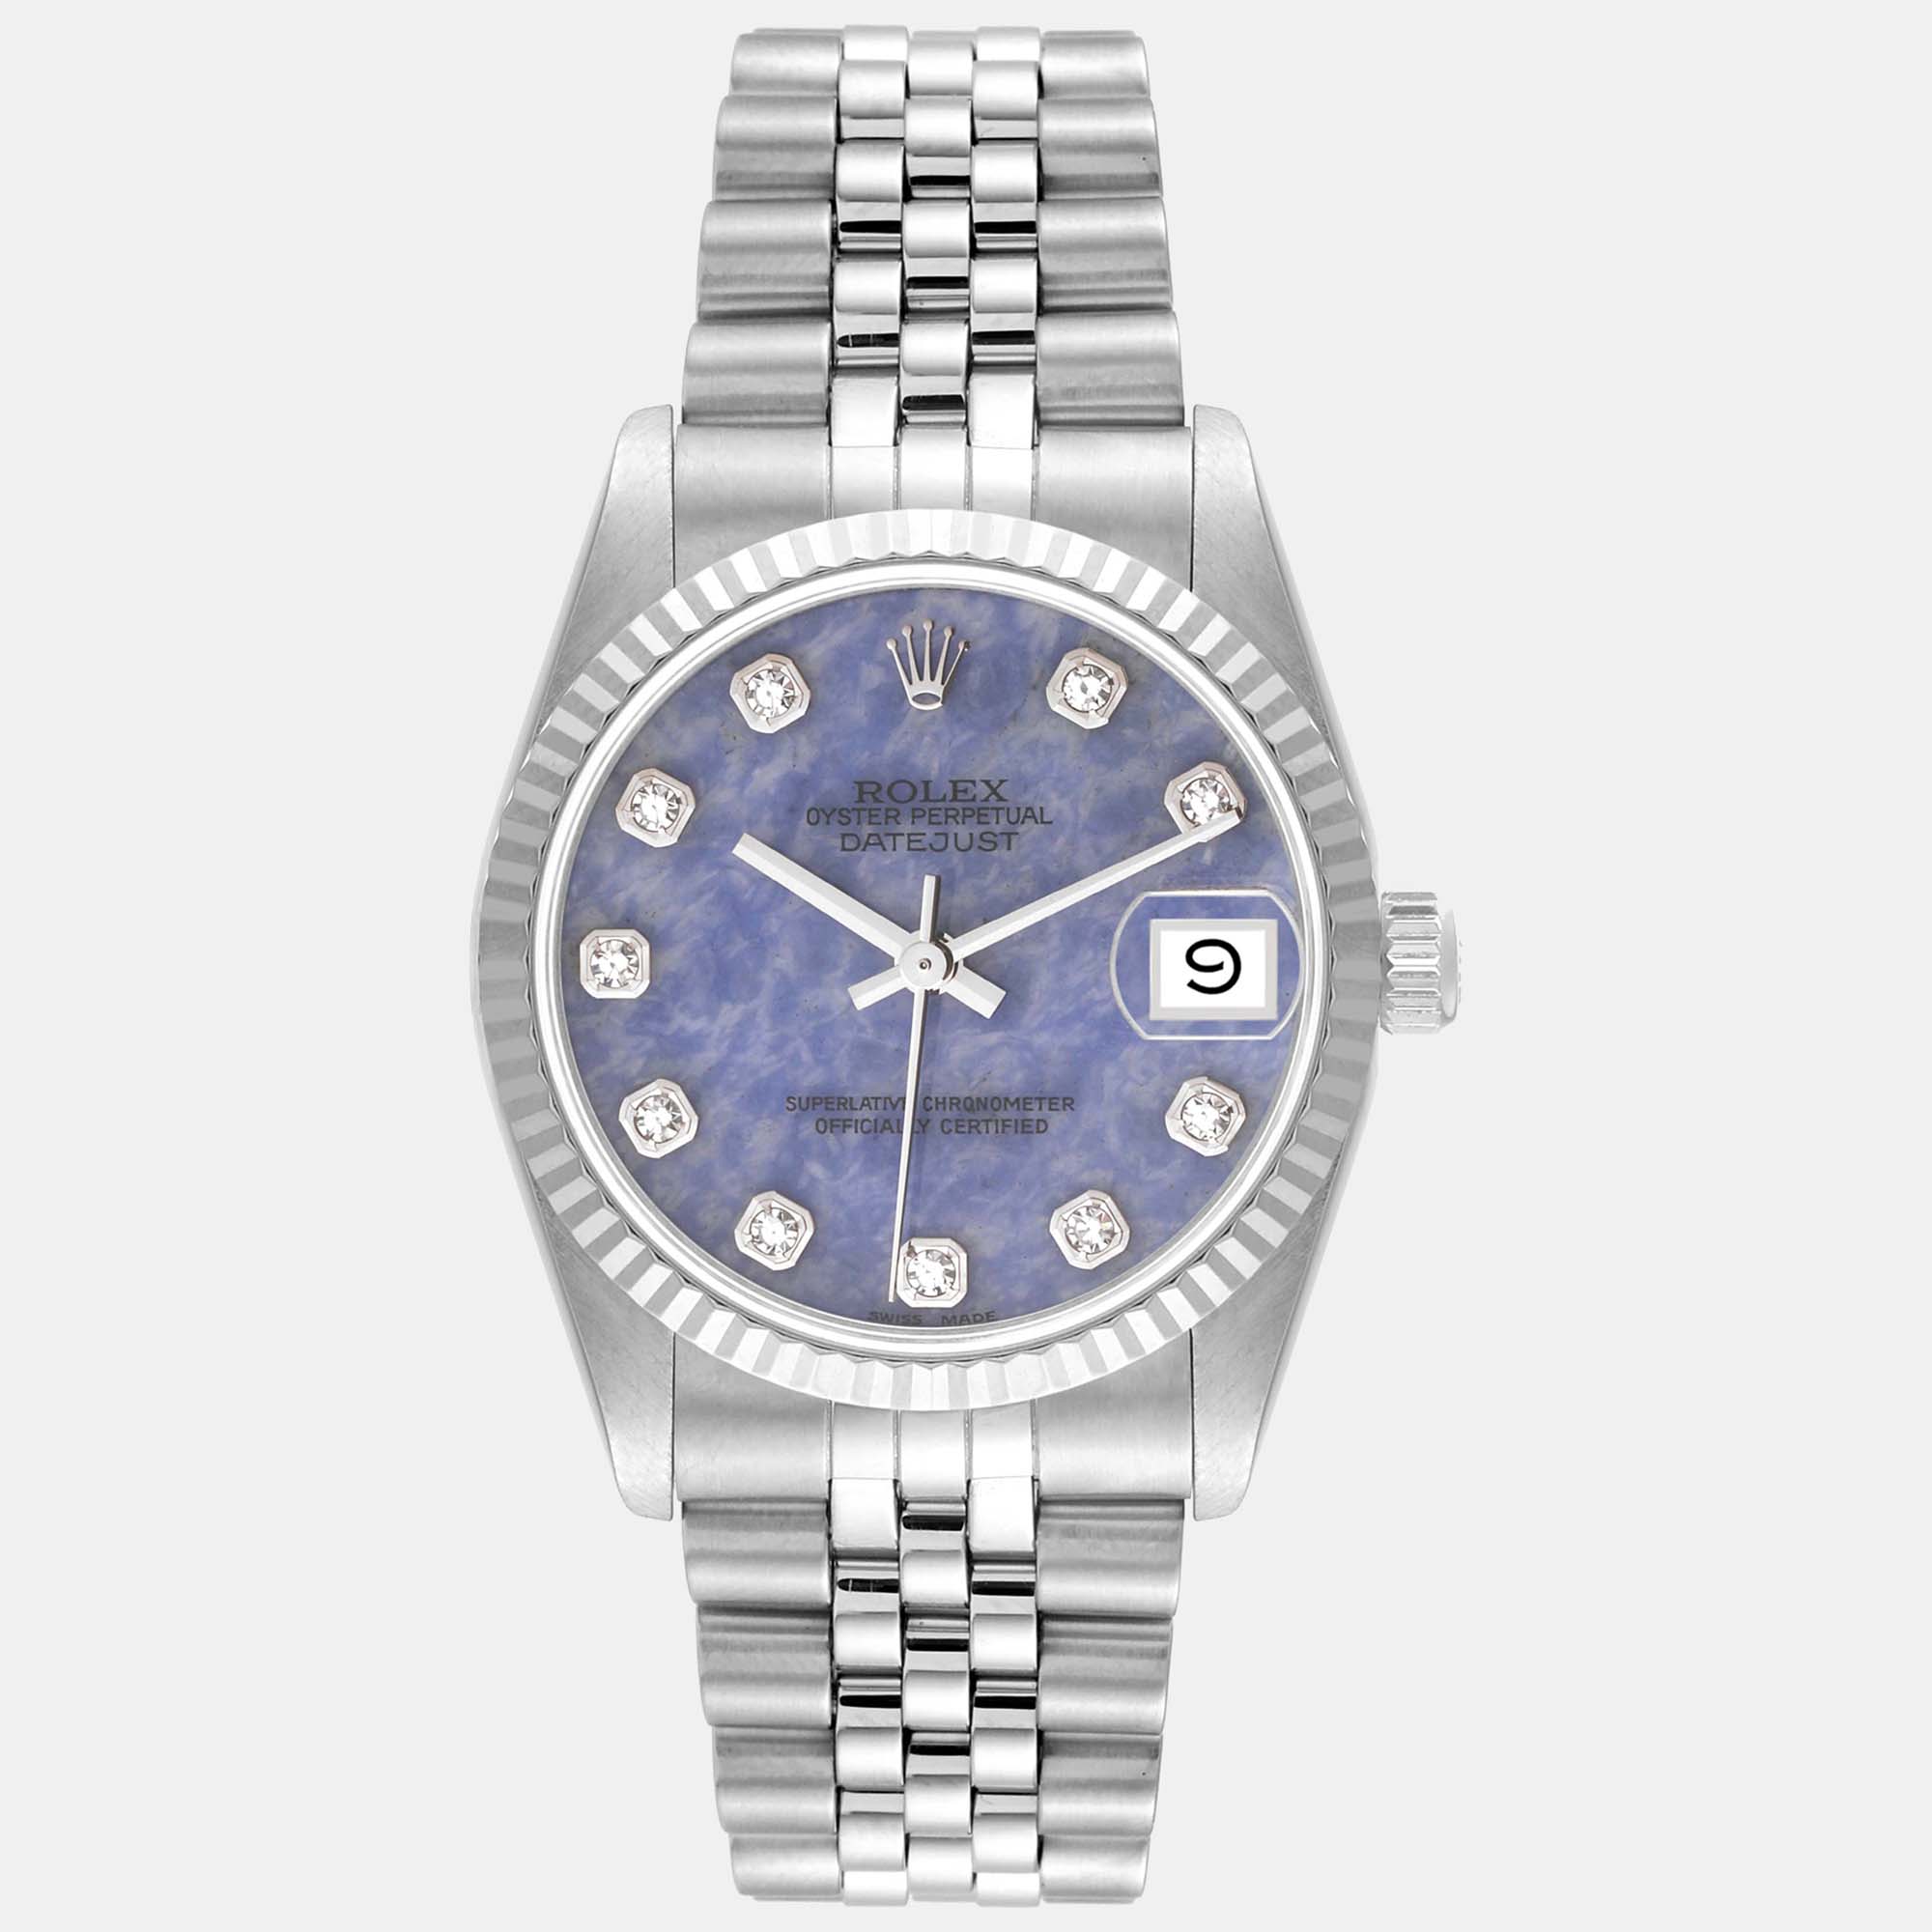 Rolex datejust midsize steel white gold sodalite stone diamond dial watch 31.0 mm